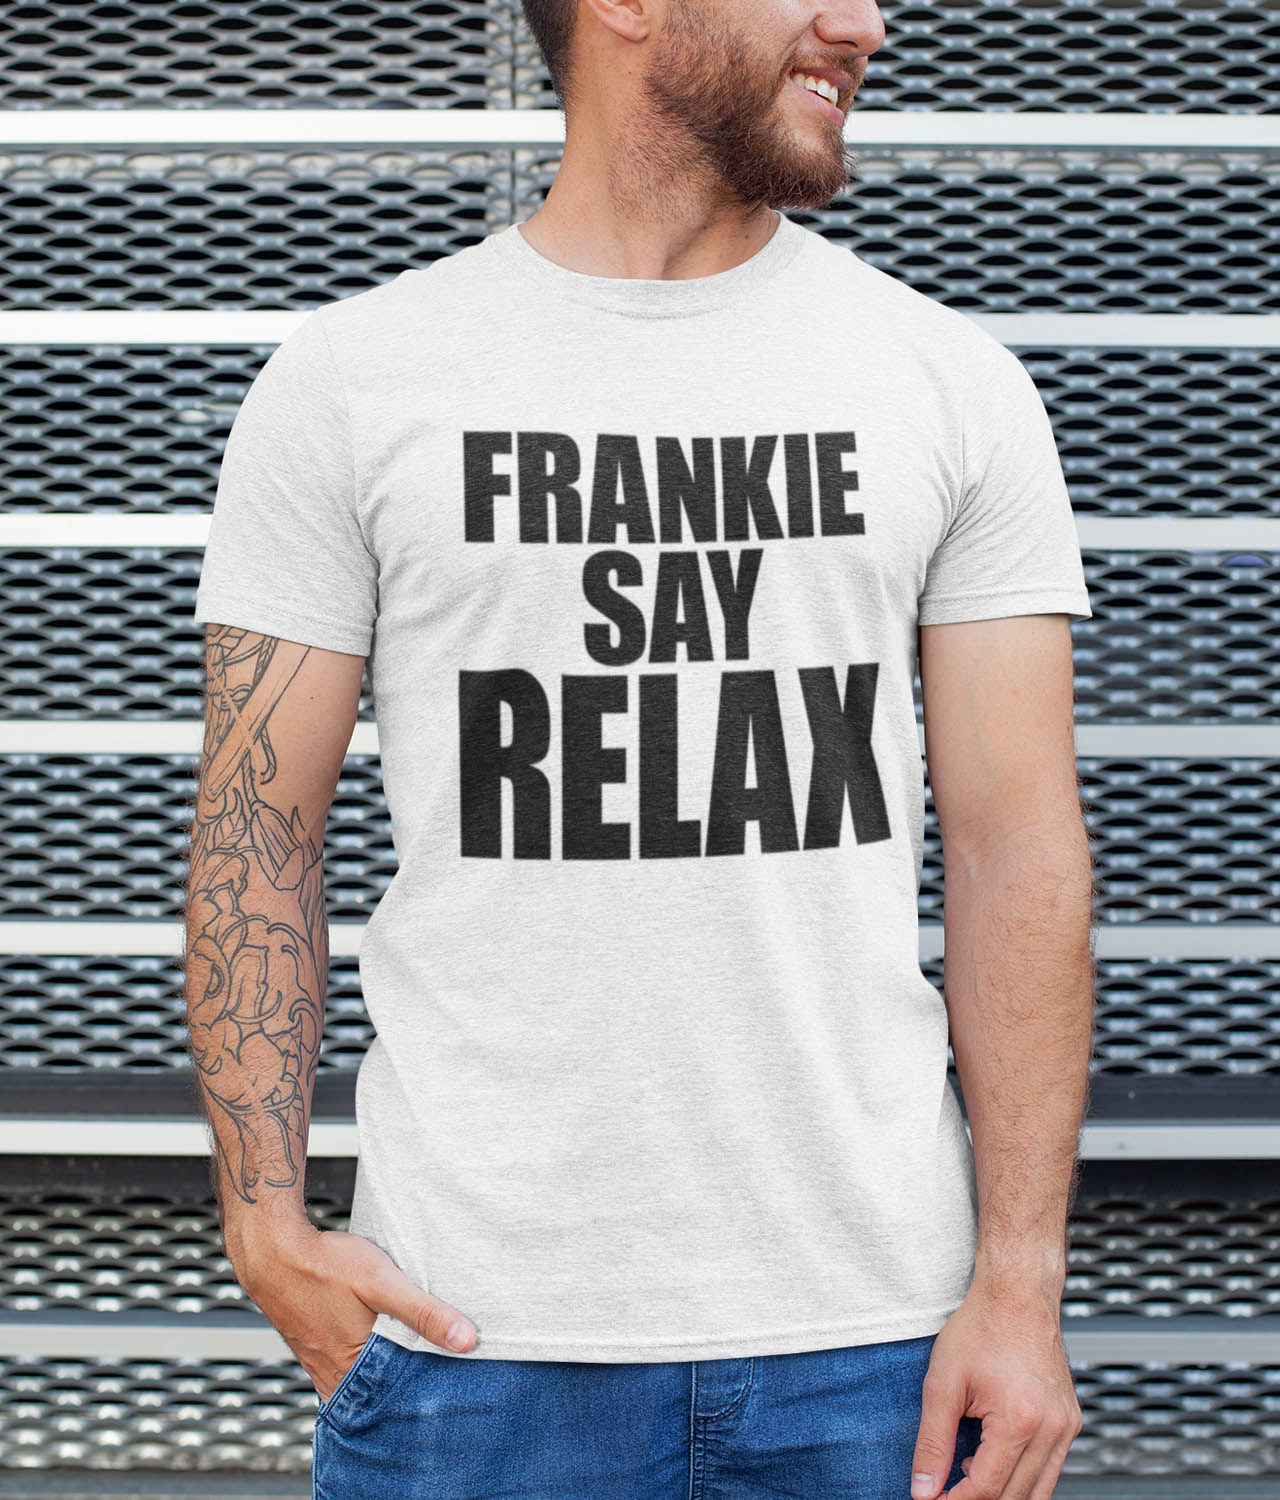 Buy Frankie Say Relax - Friends Shirt â¢ SOLIDPOP